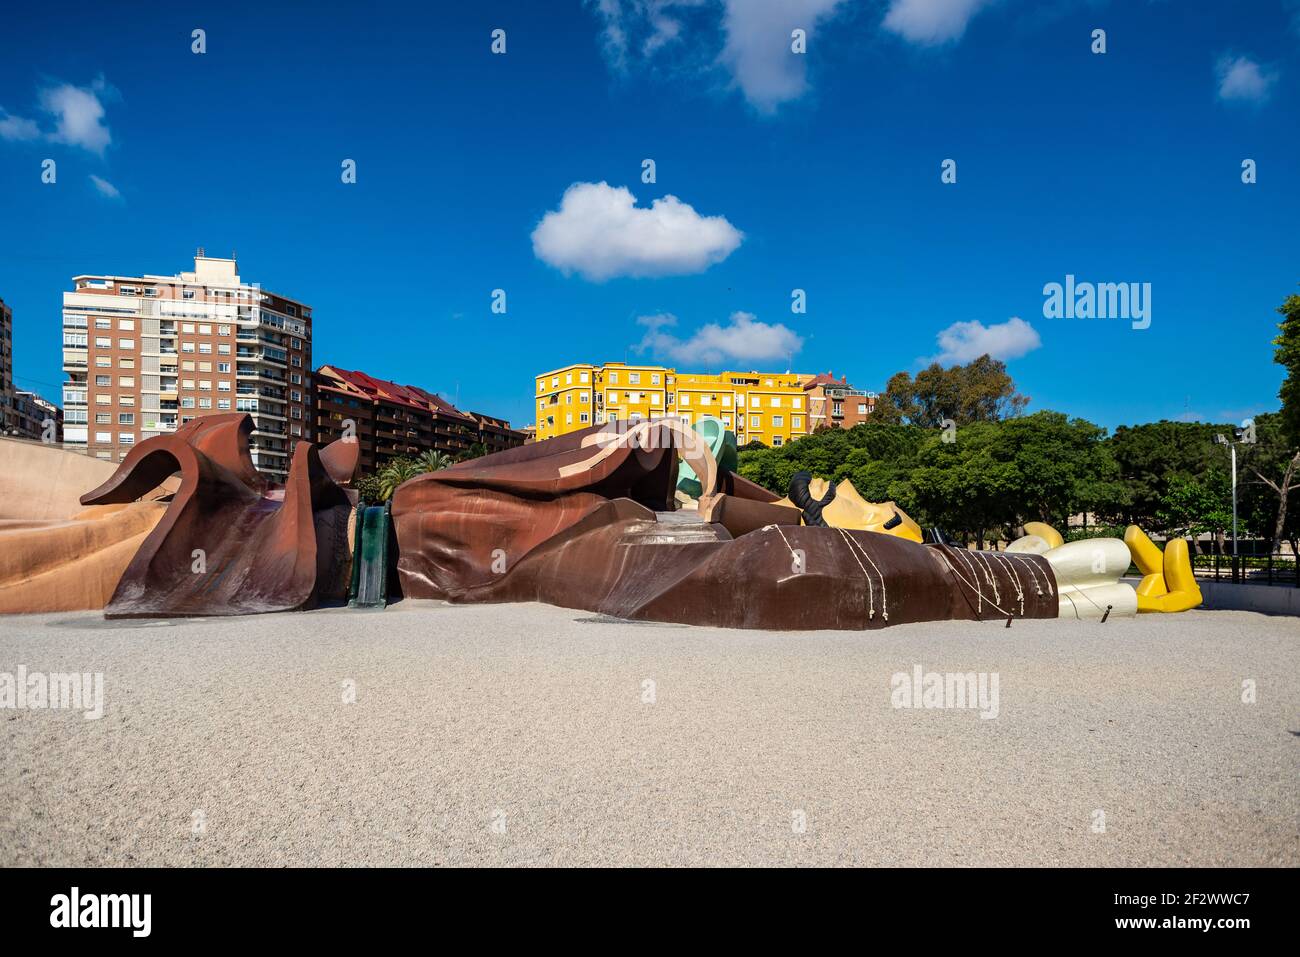 The big Gulliver playground in the Jardi del Turia, Valencia, Spain. The playground develops around a big Gulliver sculpture laid on the ground Stock Photo